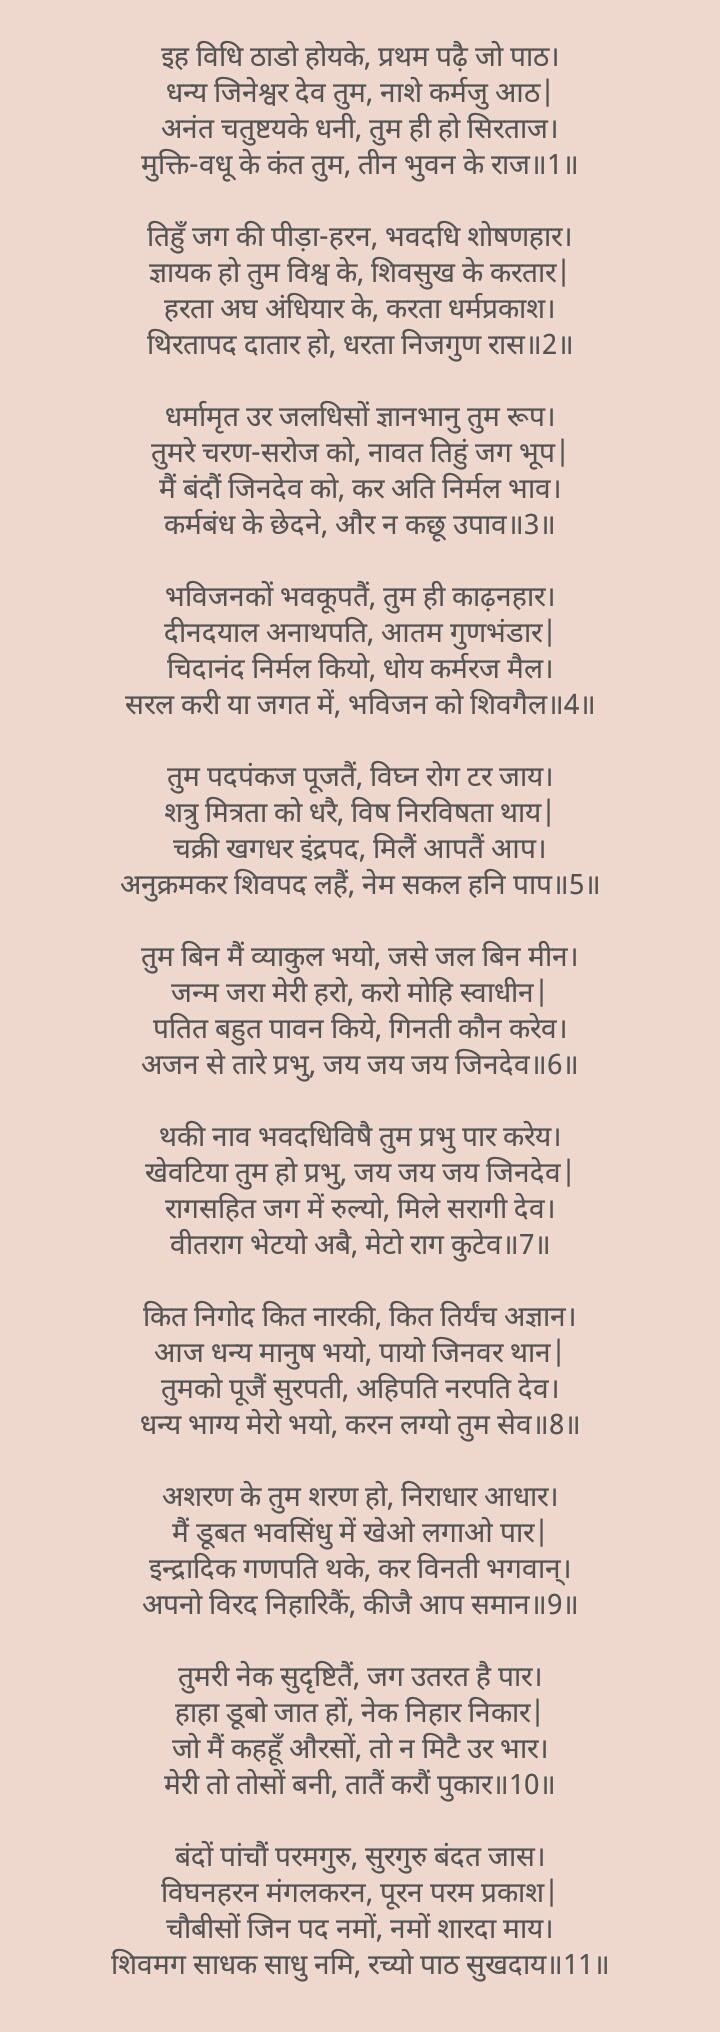 इह विधि ठाणों होए के | tum bin mai vyakul bhayo jaise jal bin meen || Vinay Path Jain puja Image